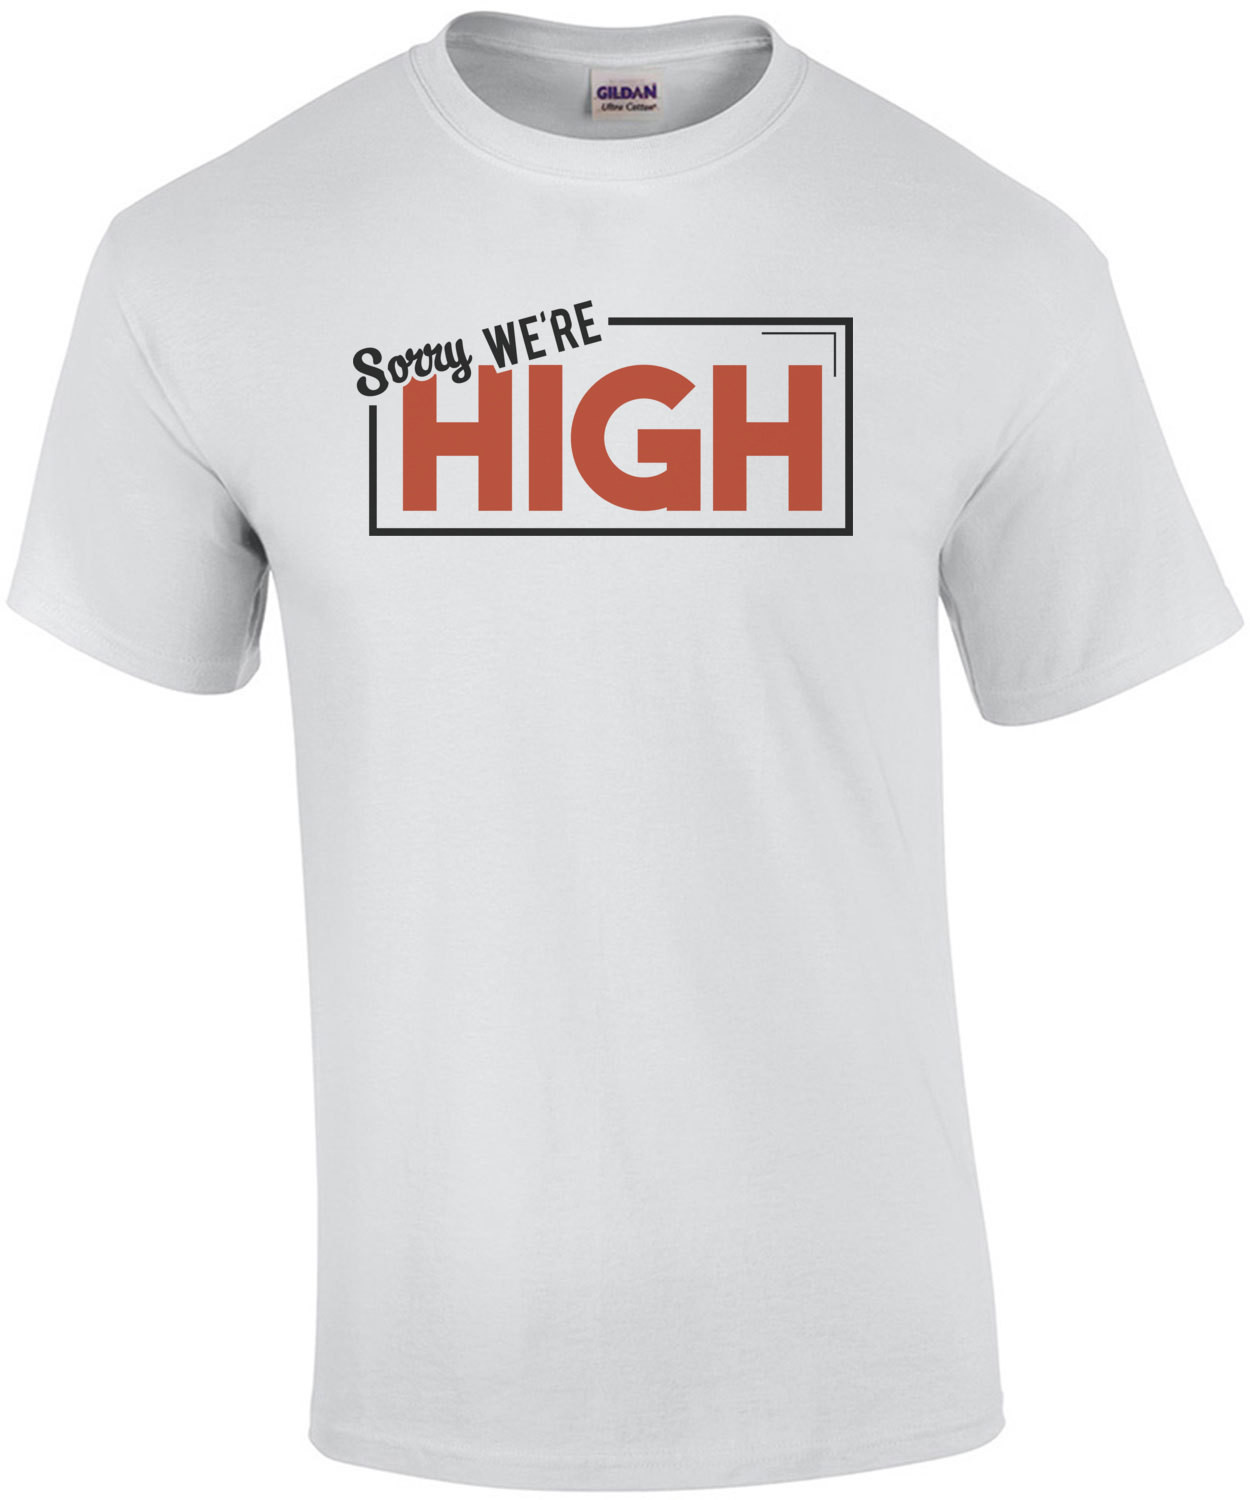 Sorry, we're high - weed marijuana t-shirt